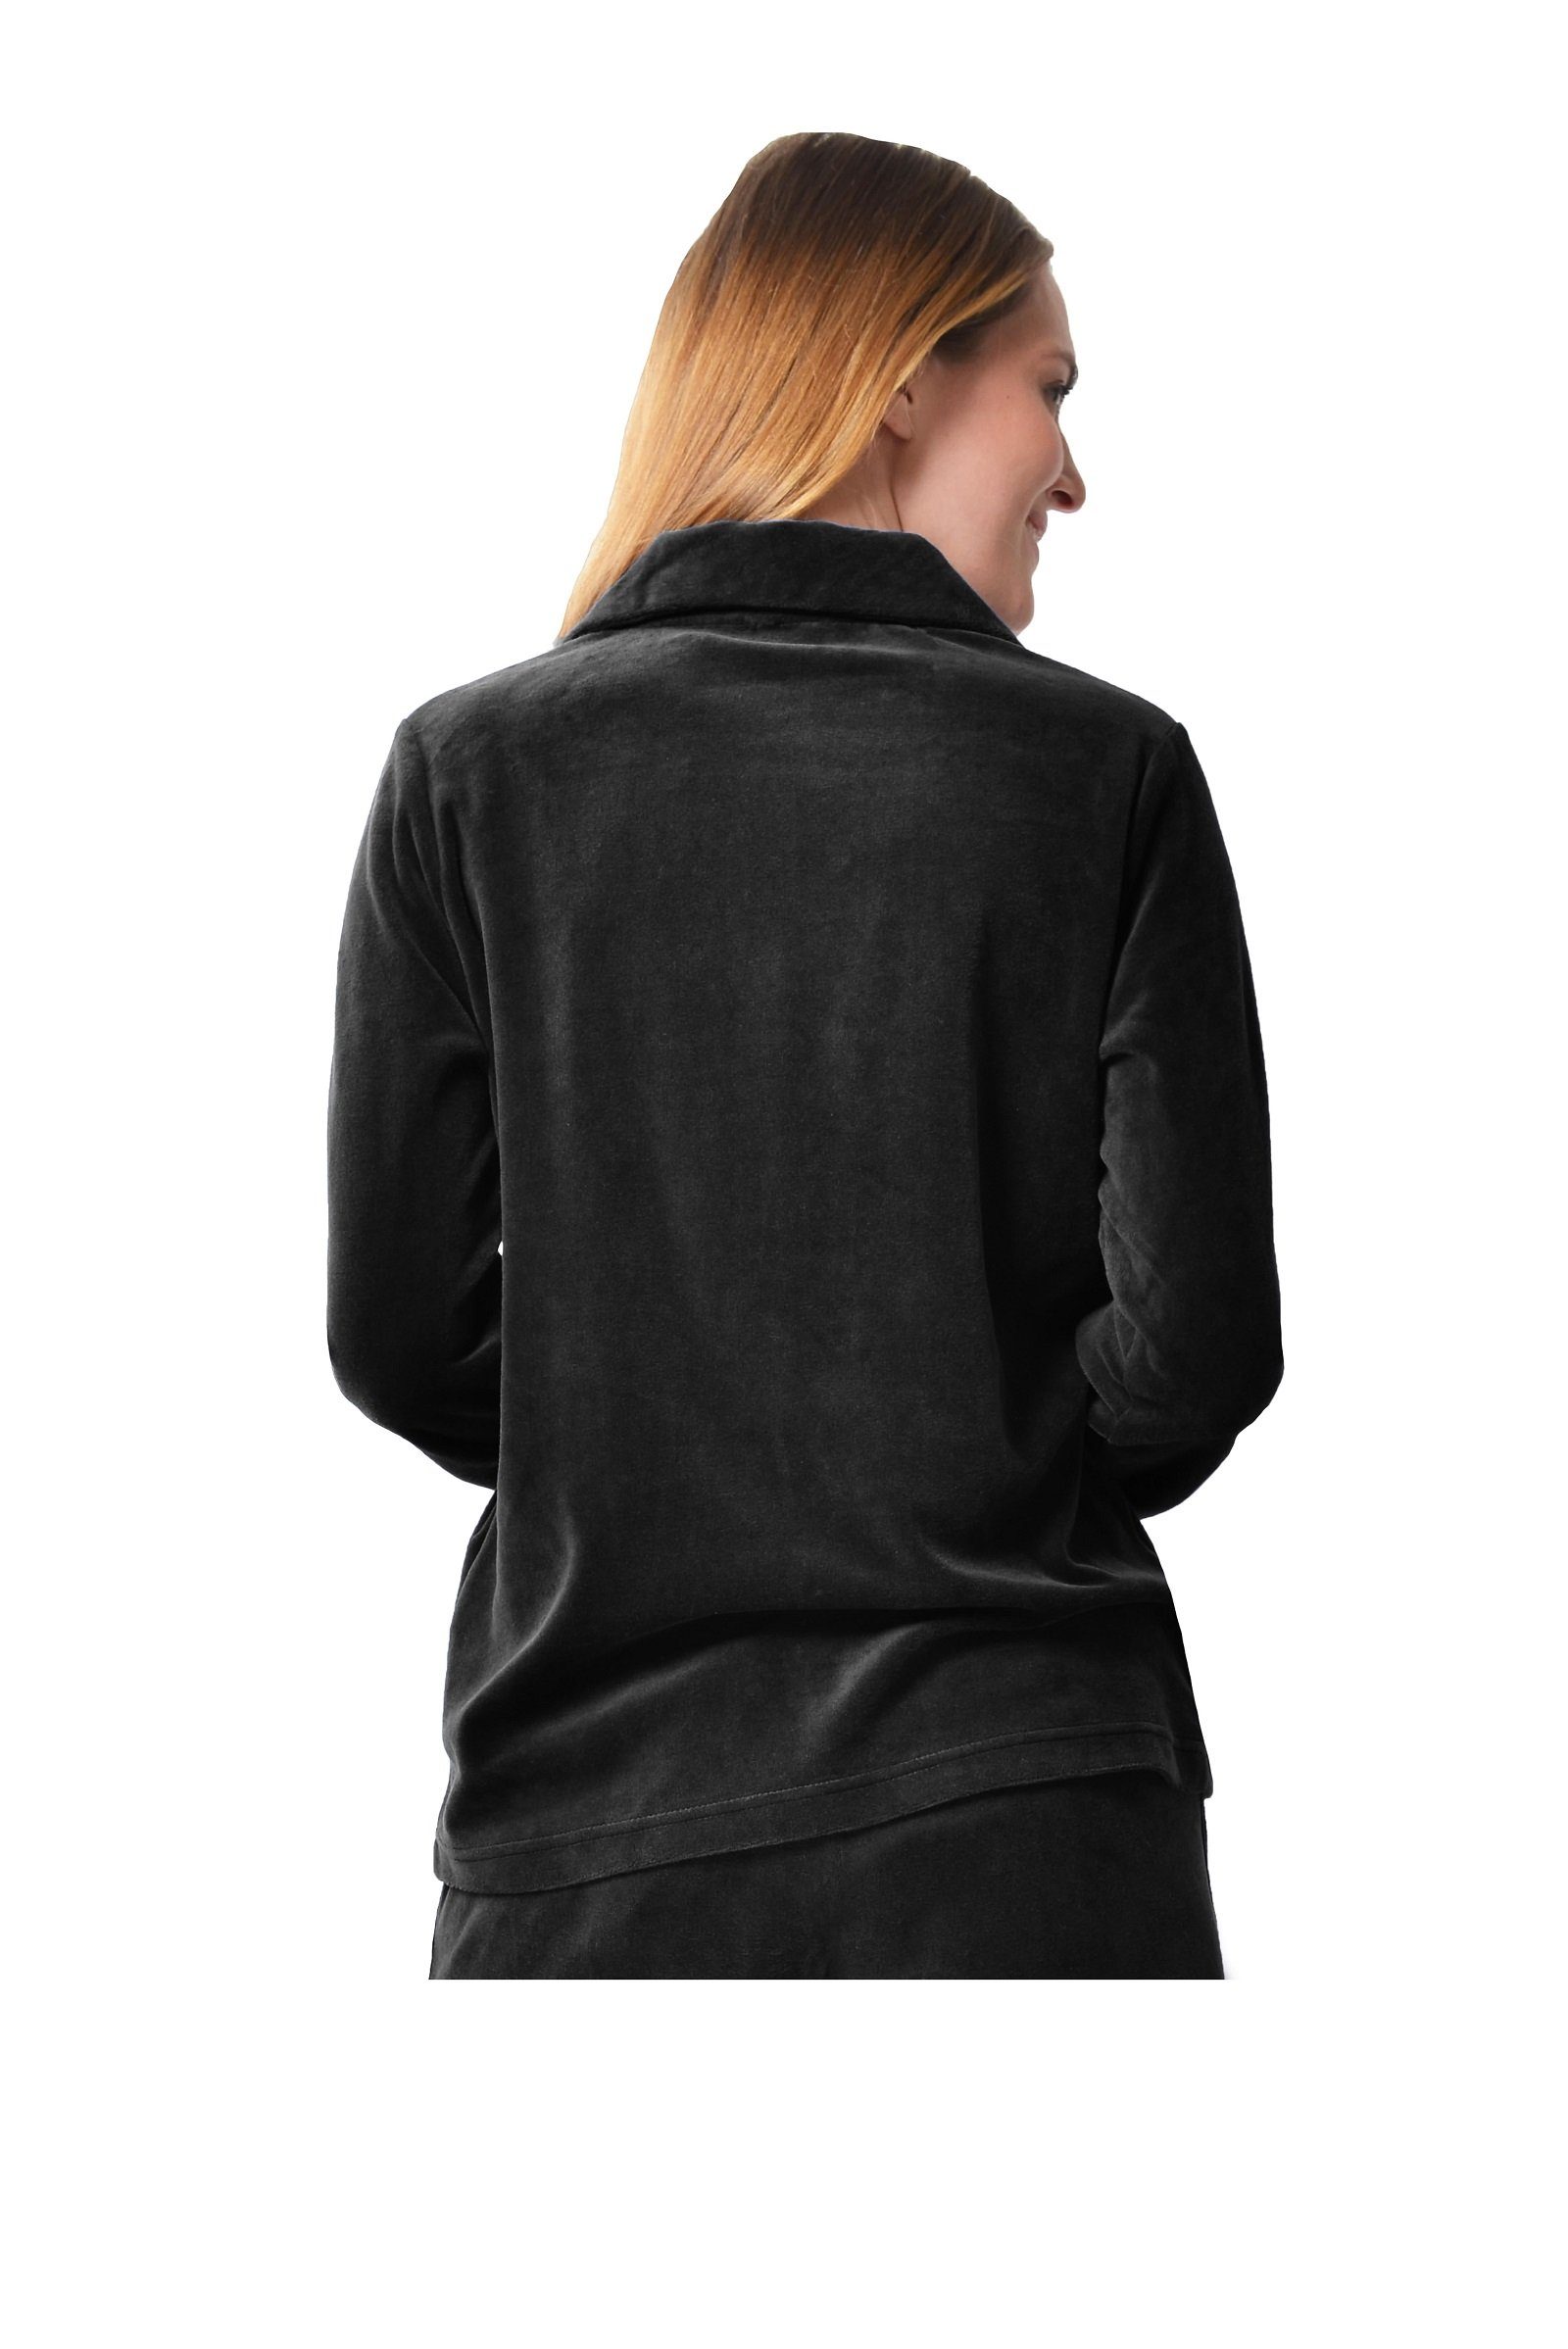 Damen Jacken RAIKOU Blusenjacke Eleganten Homewear Freizeitjacke Hausjacke Blues Mit Reißverschluss (80% Baumwolle smartweiche N